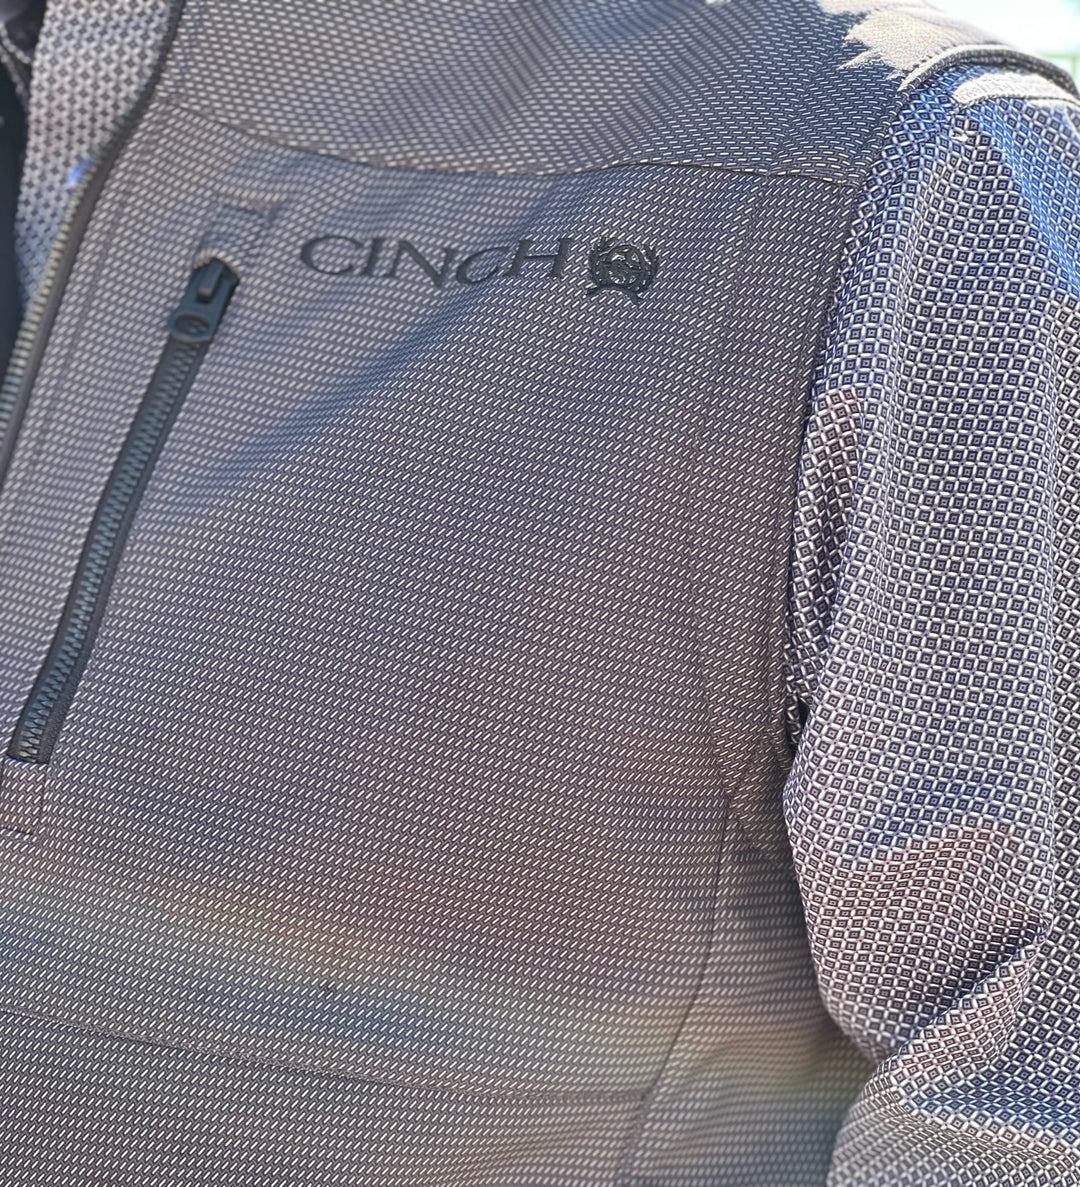 Krase Charcoal Vest by Cinch